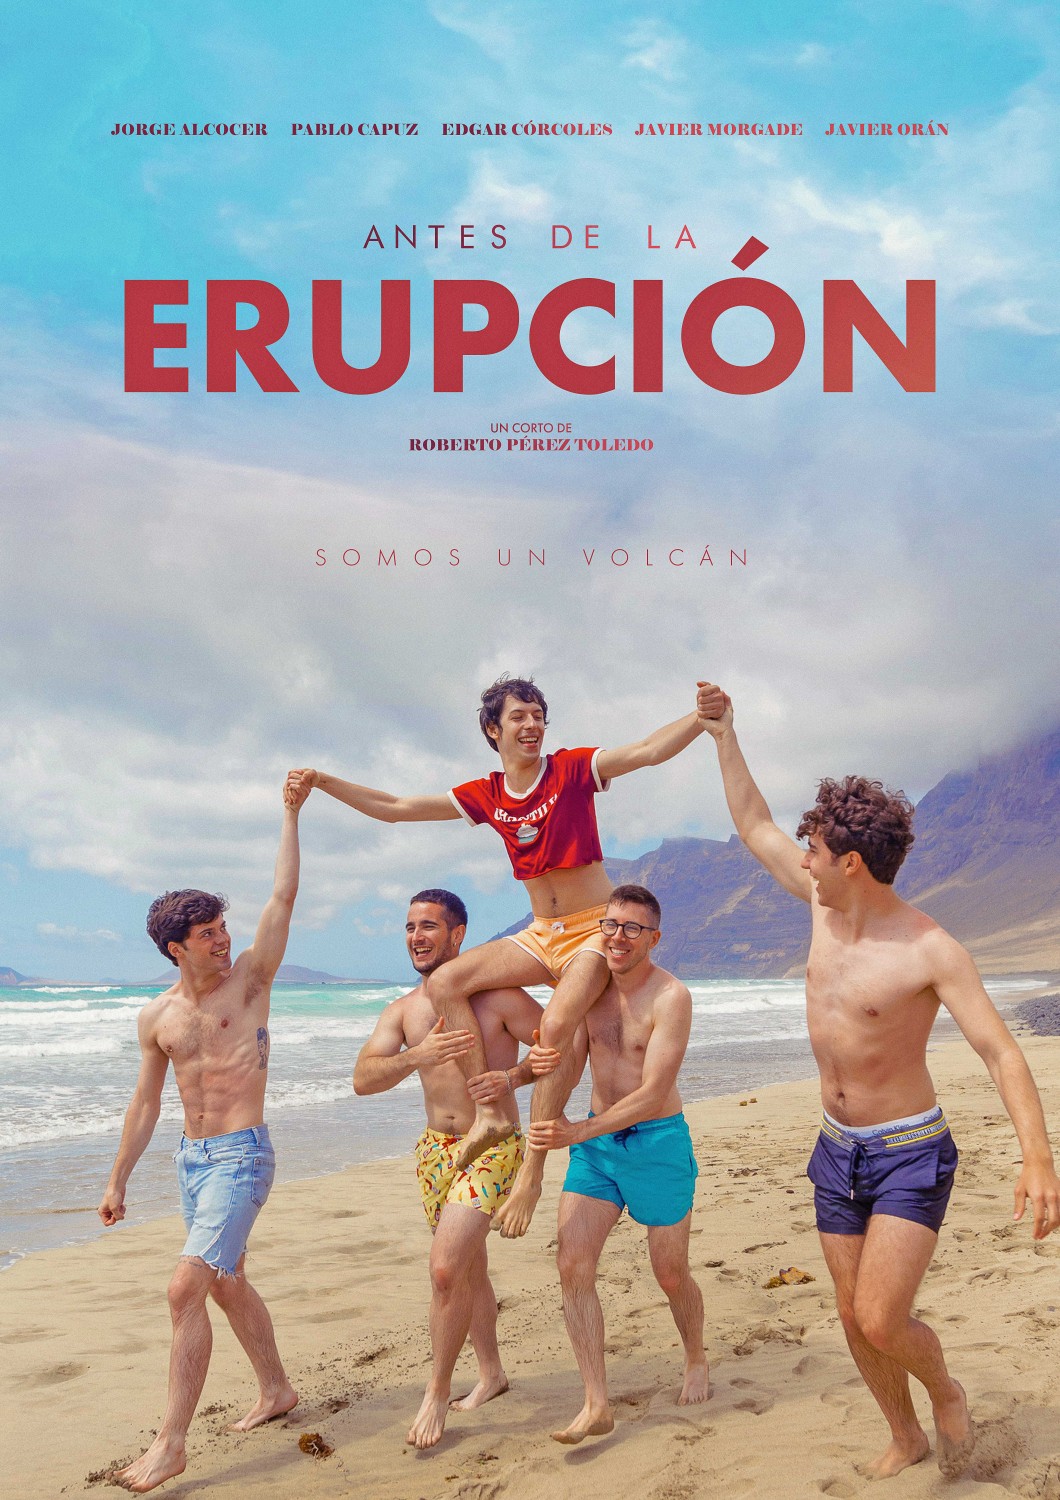 Extra Large Movie Poster Image for Antes de la erupcin